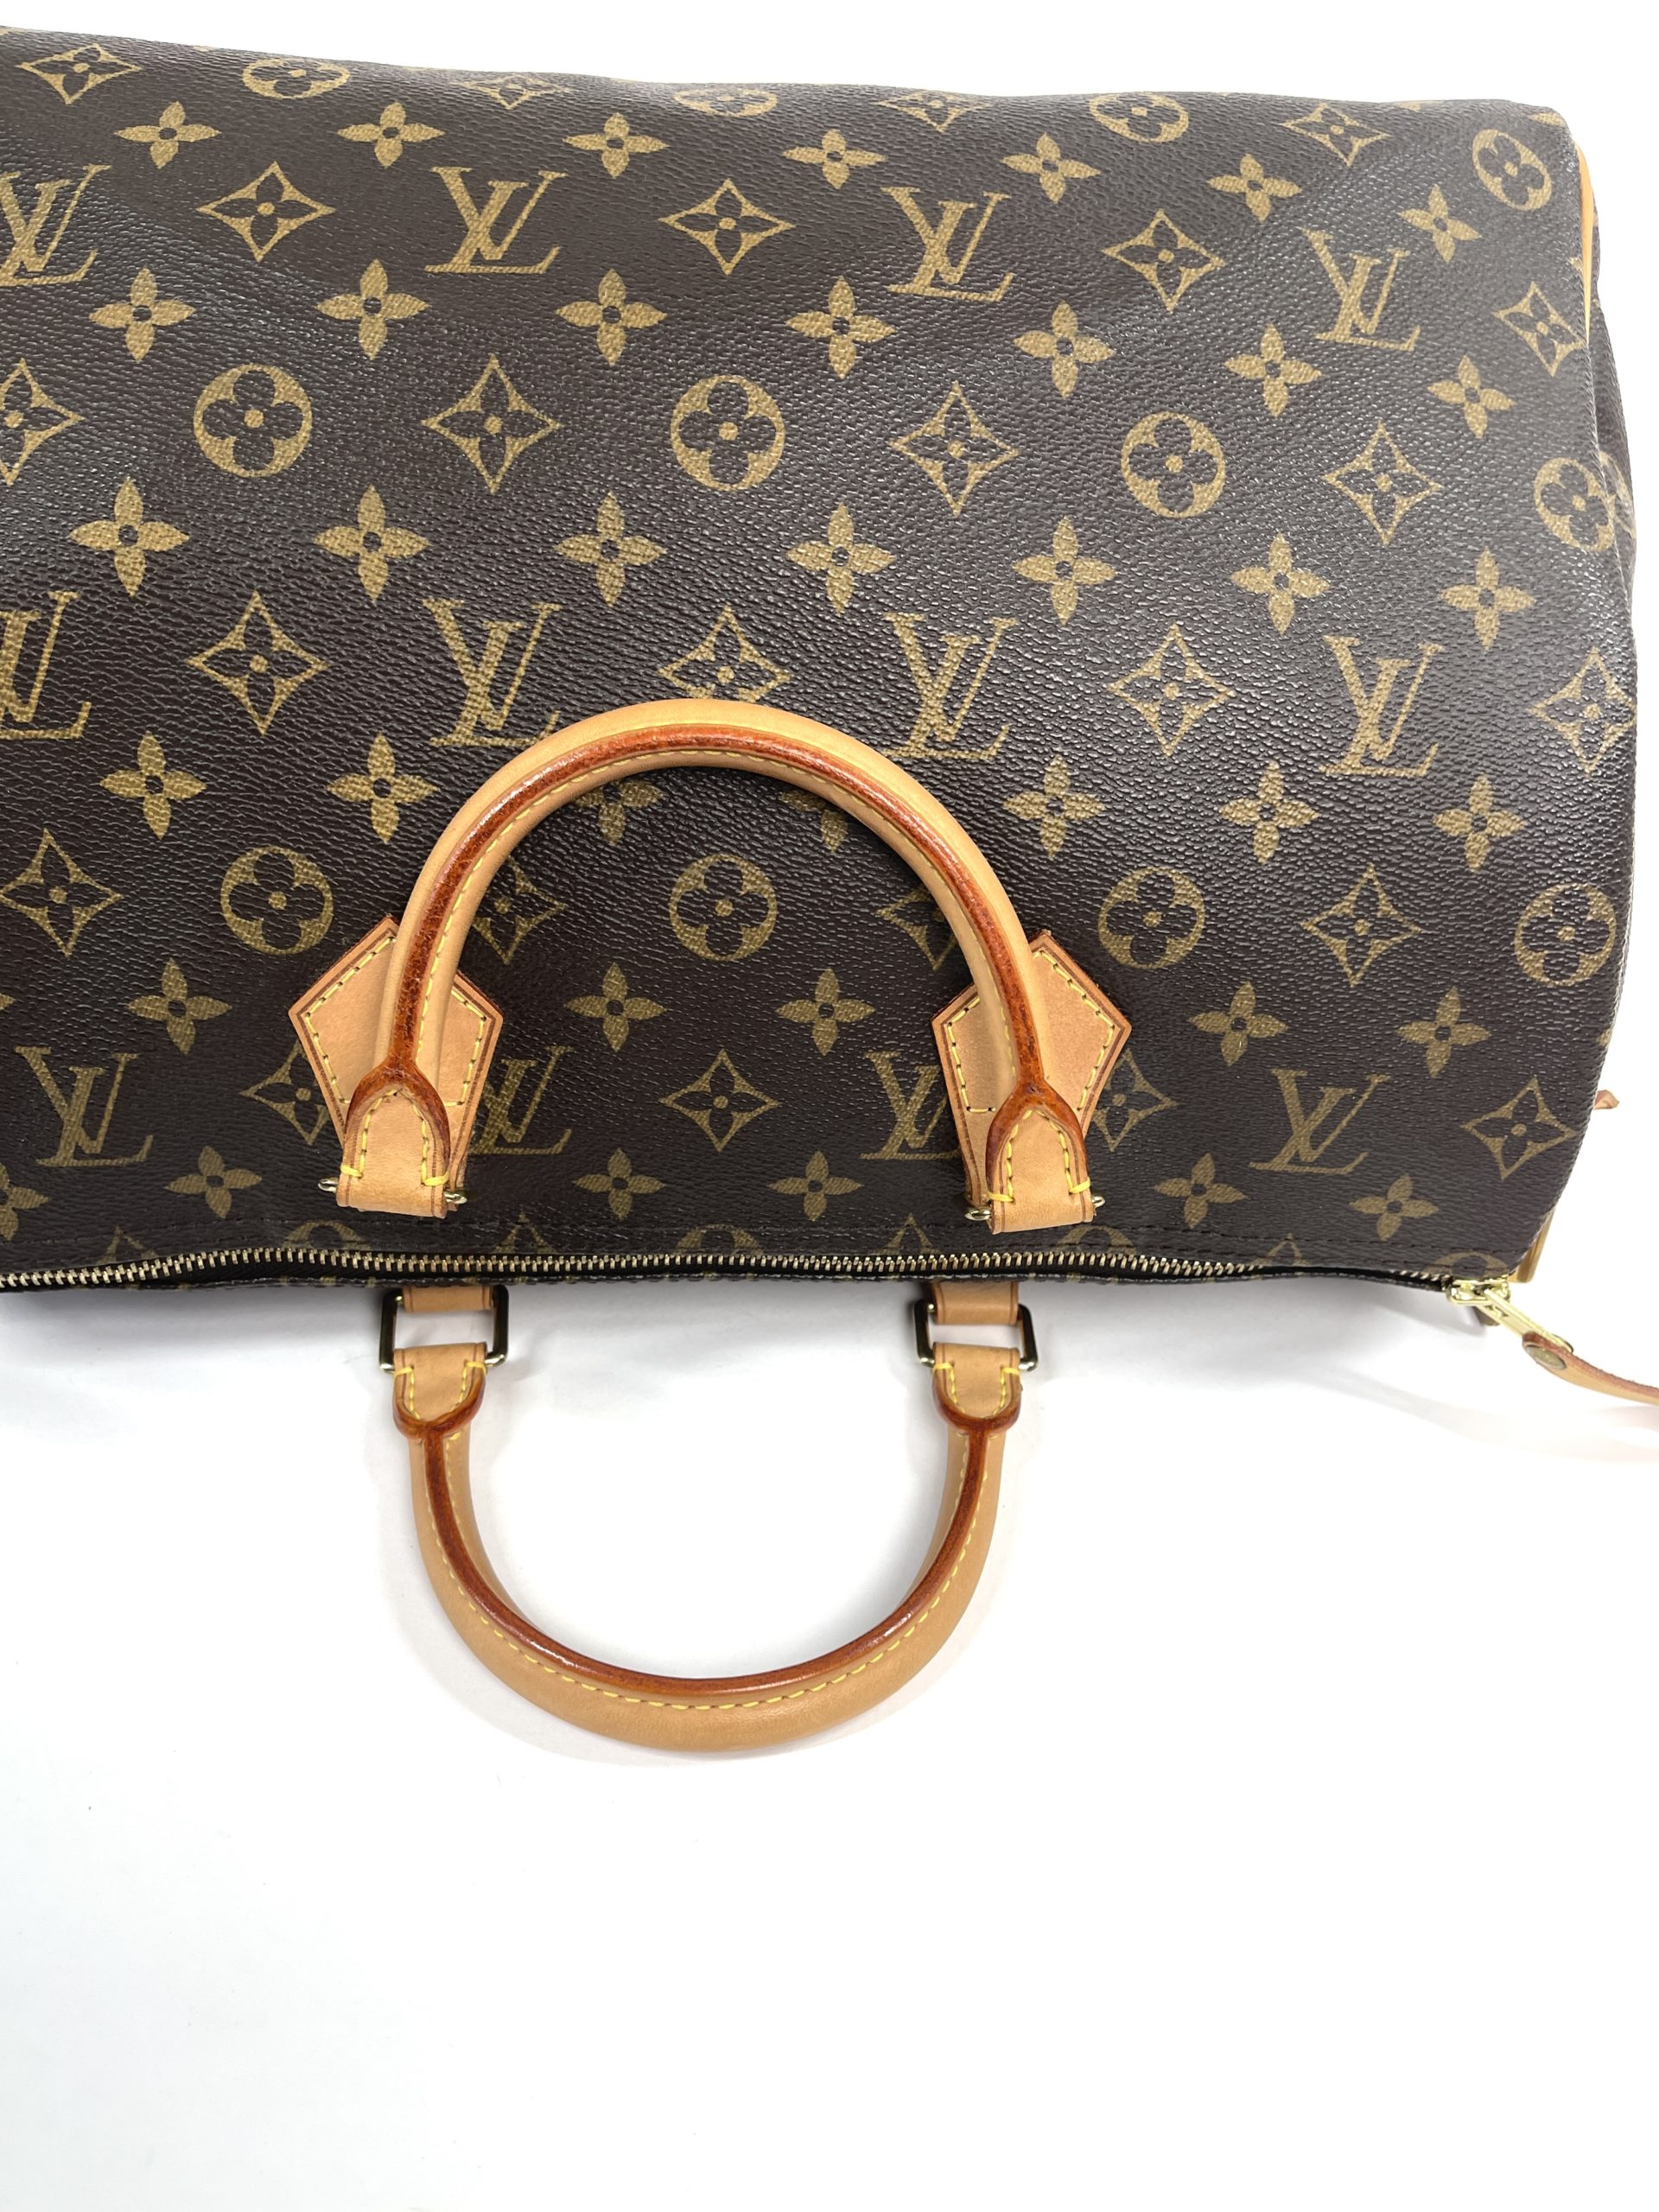 Louis Vuitton Handbag Monogram Speedy 35 Canvas Brown Unisex M41524 Auction